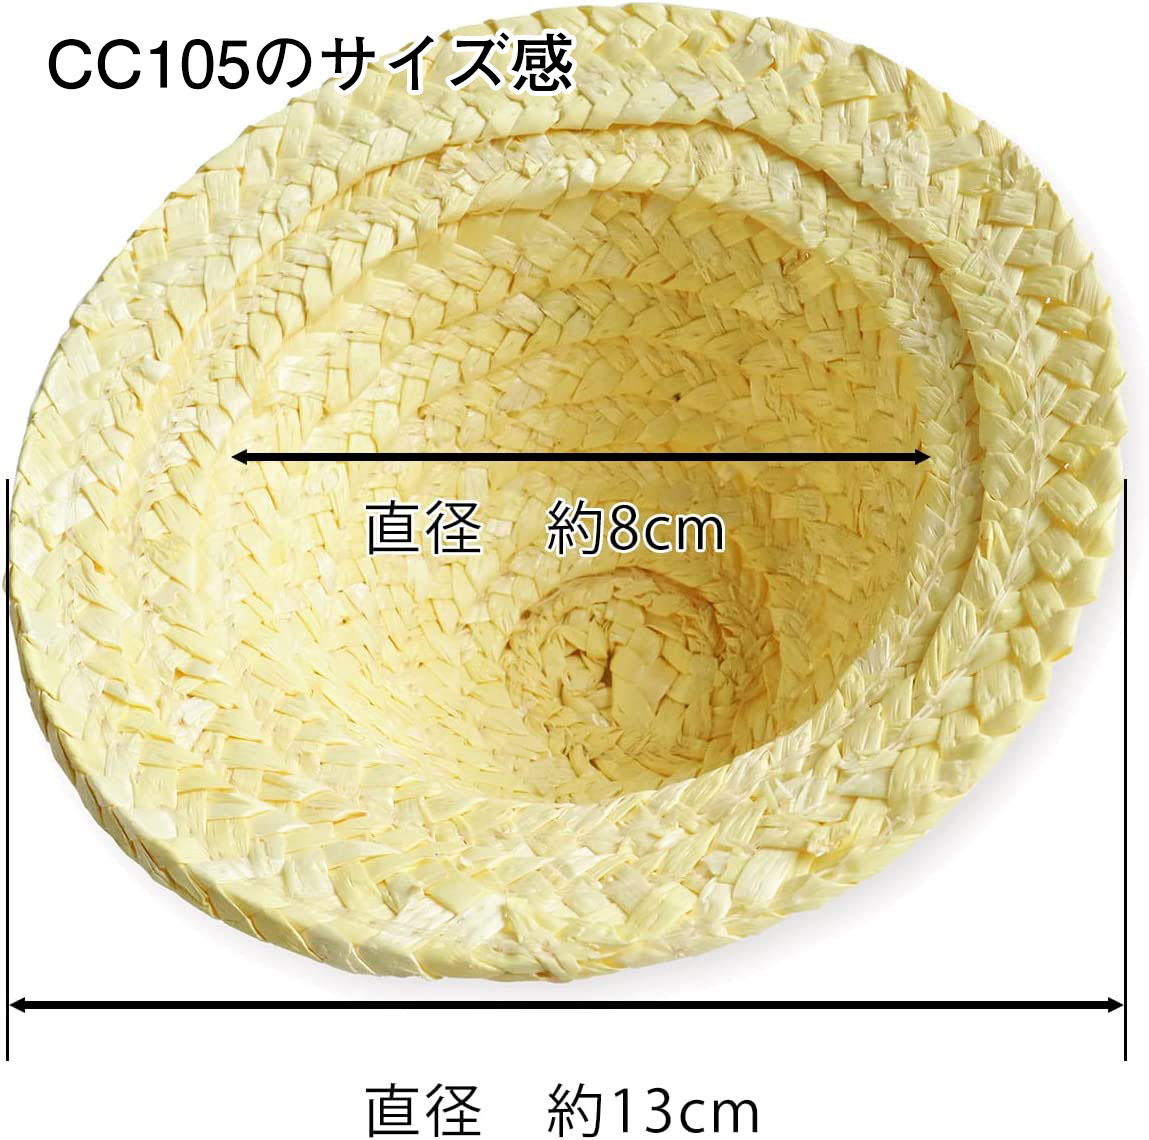 CC104～107 麦わら帽子 ドール用 (個)「手芸材料の卸売りサイトChuko Online」